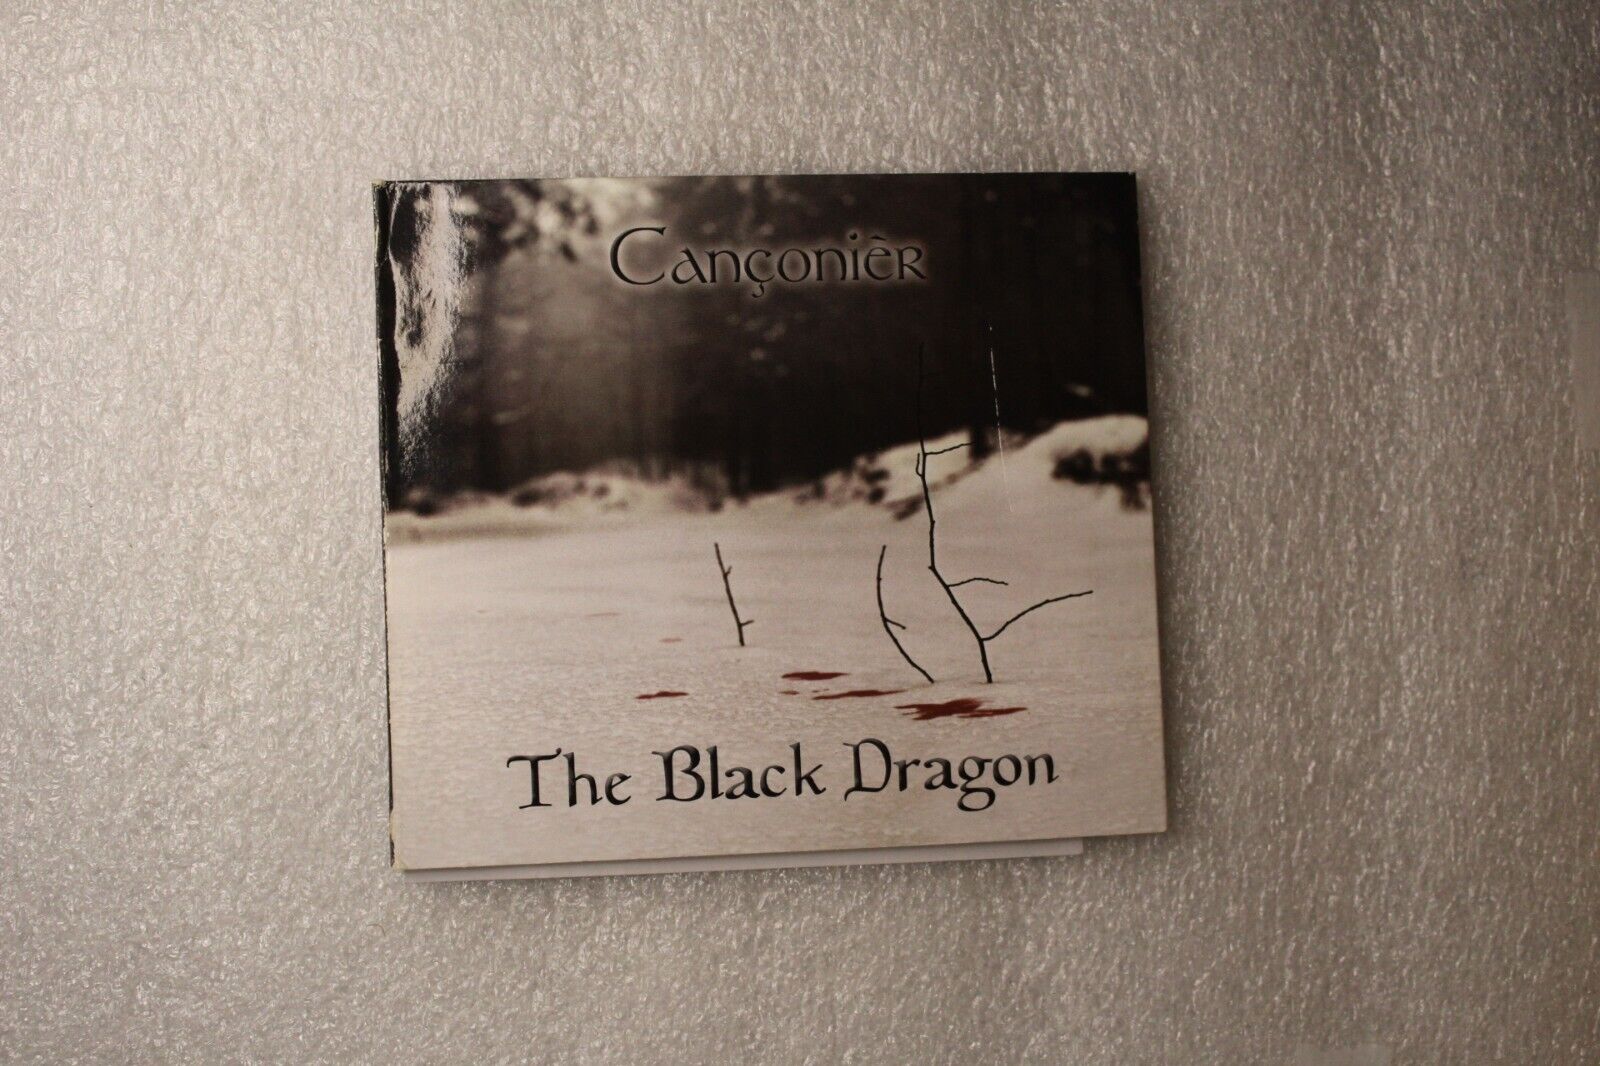 The Black Dragon by Canconier (CD)